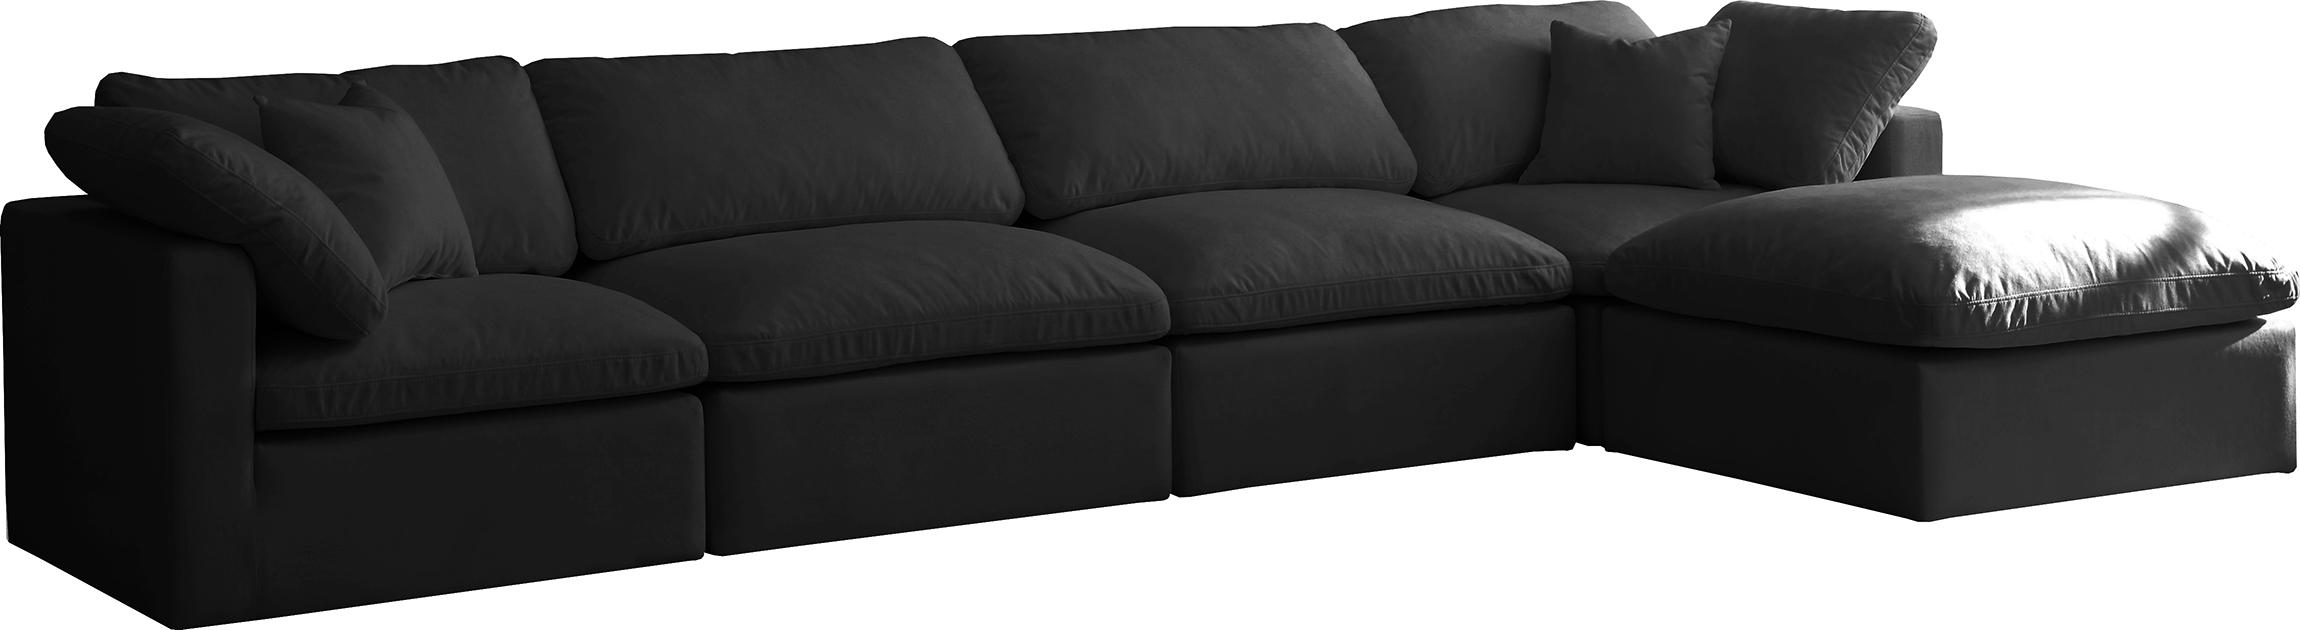 Contemporary, Modern Modular Sectional Sofa 602Black-Sec5A 602Black-Sec5A in Black Fabric